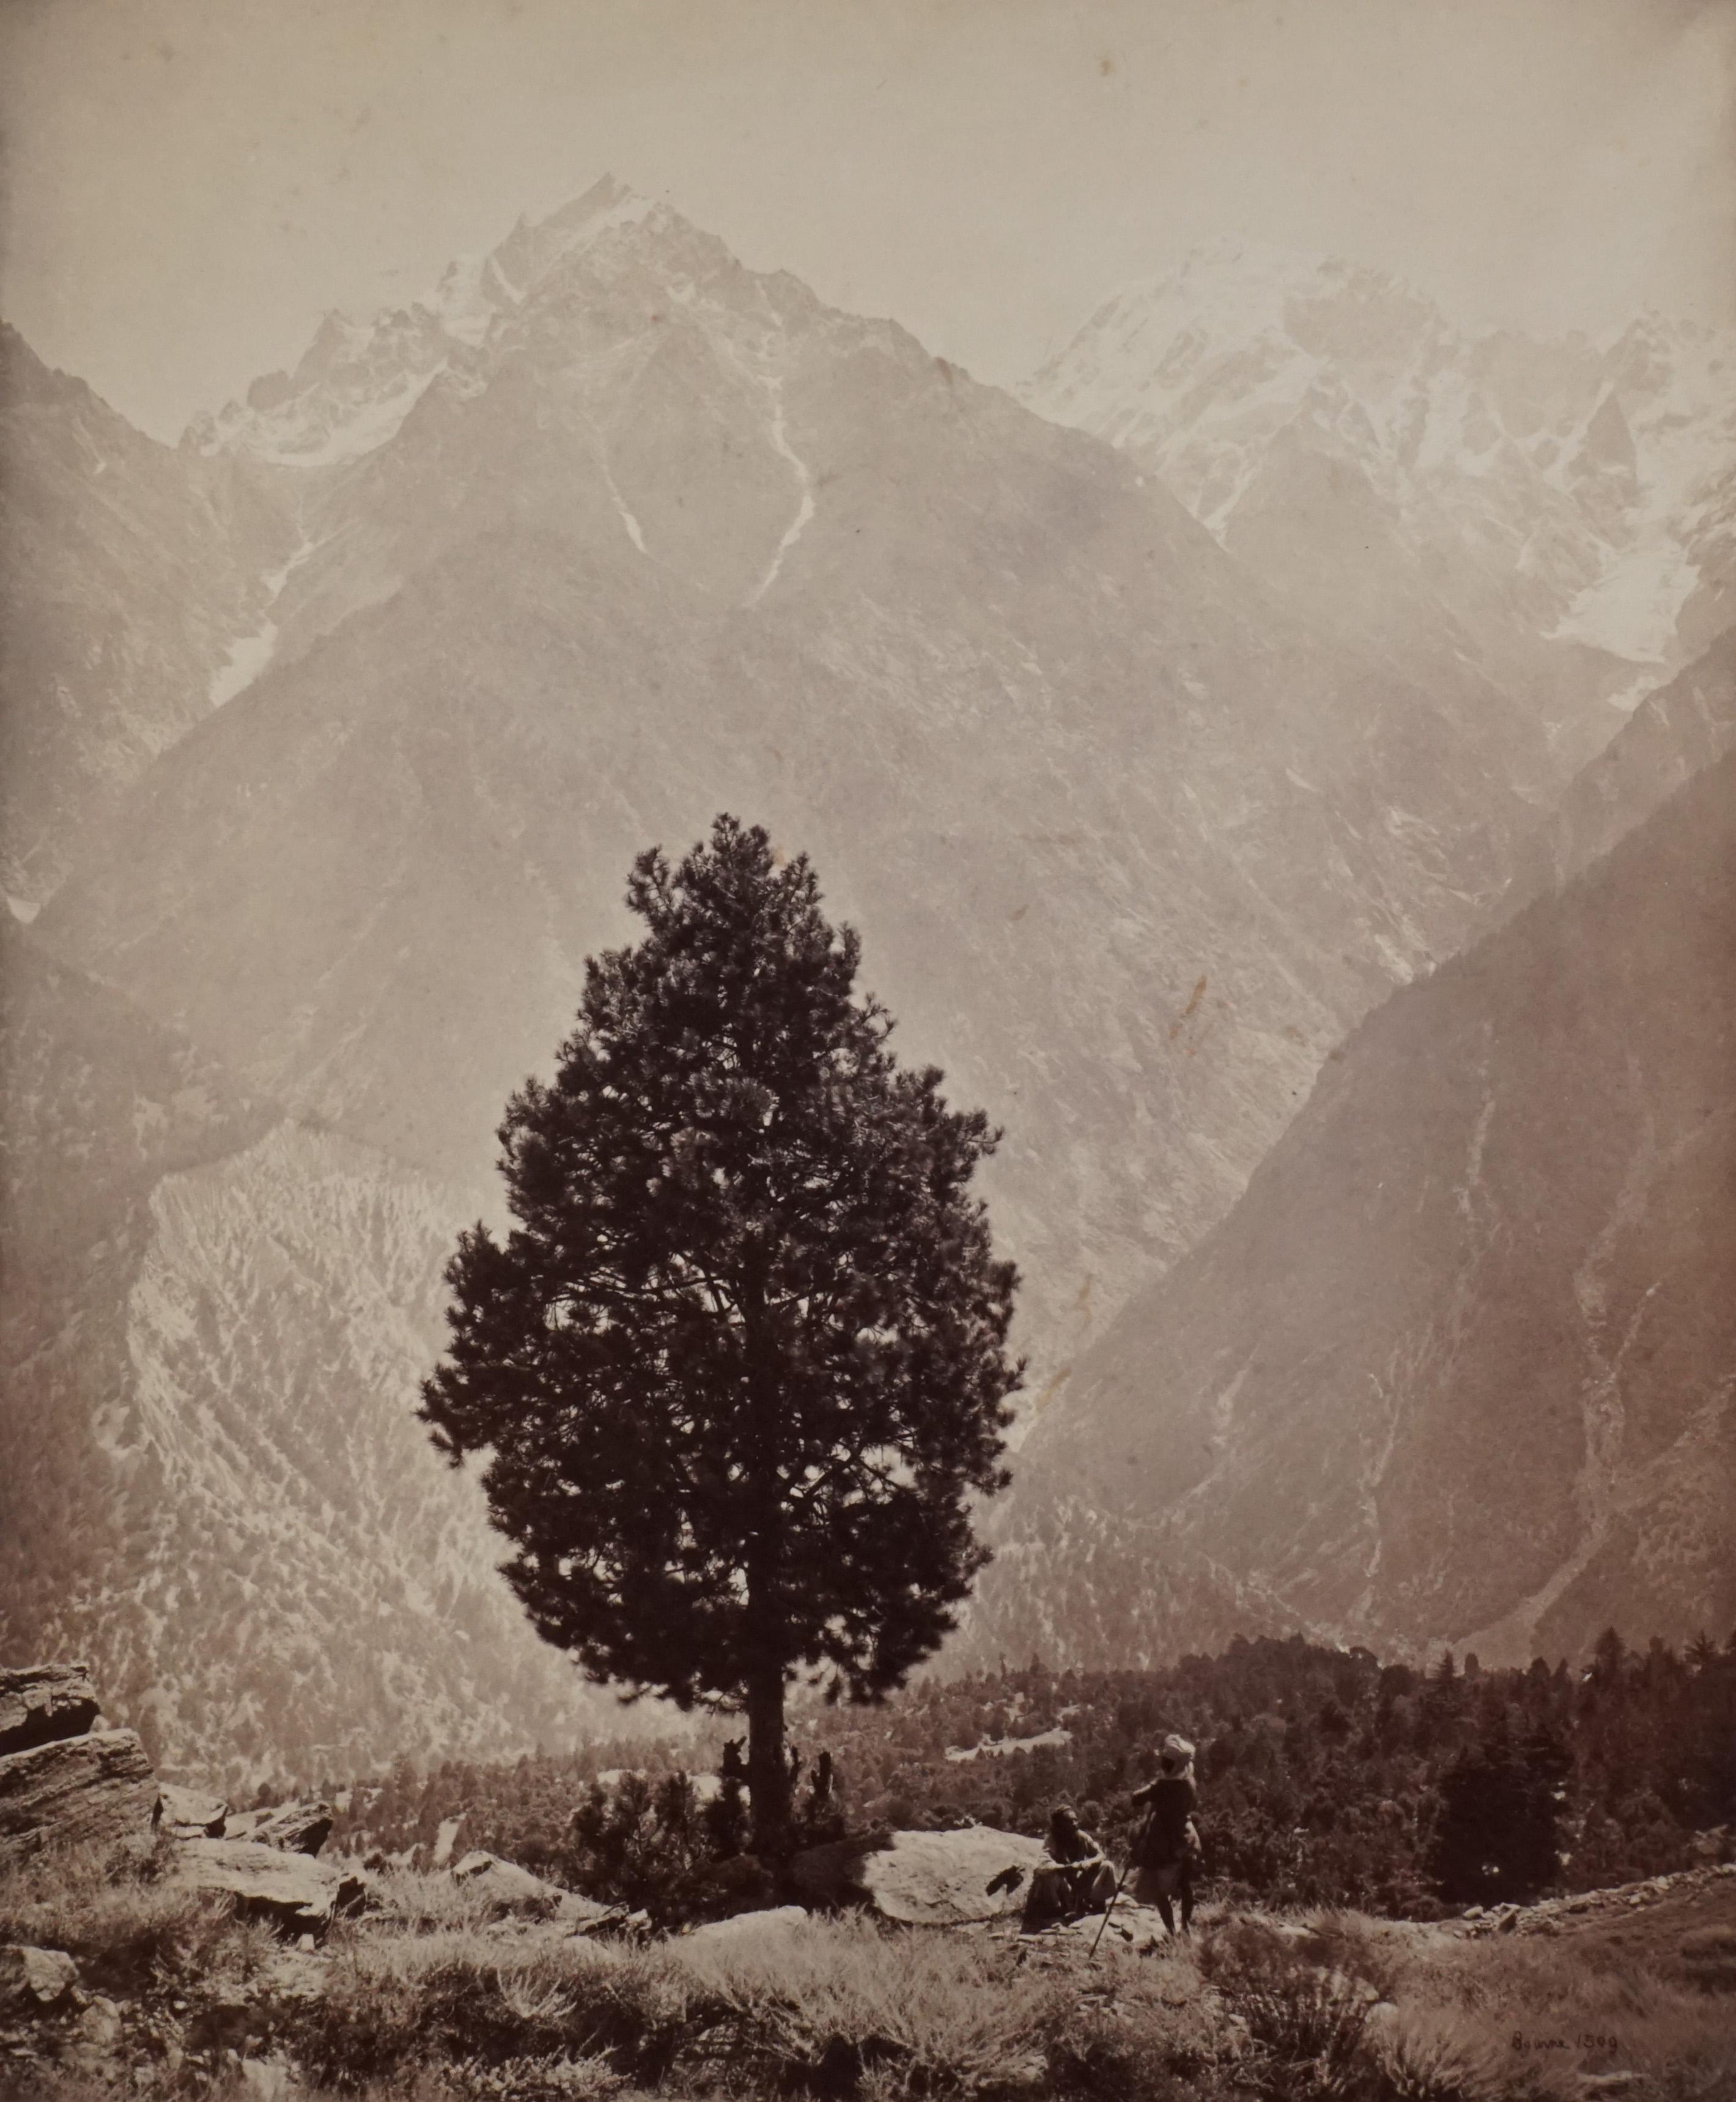 Samuel Bourne Black and White Photograph - Specimen of the Edible Pine, Chini District, 1509, 1866